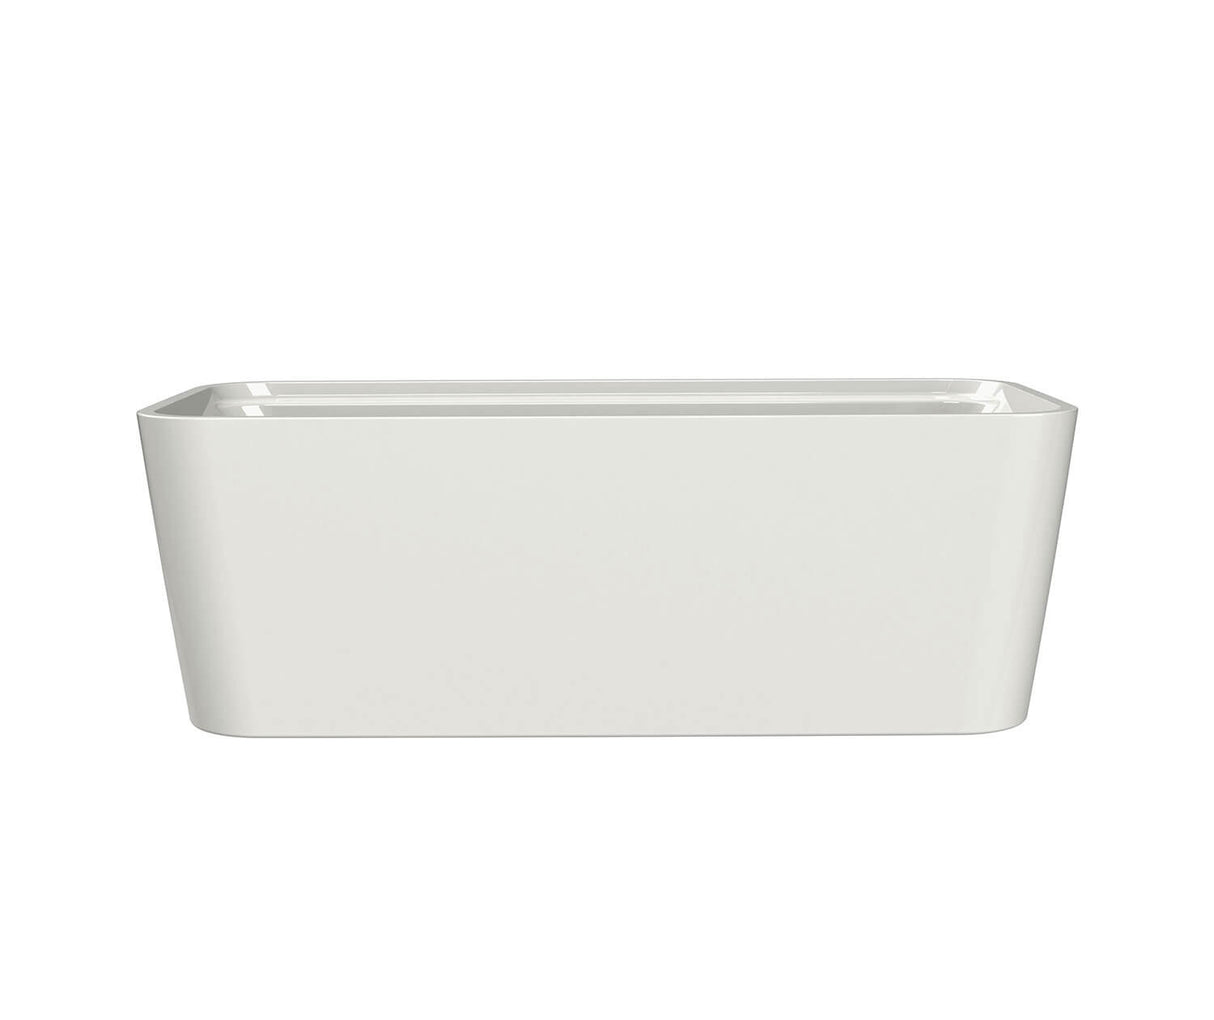 MAAX 106386-000-001-000 Oberto 6731 Acrylic Freestanding Center Drain Bathtub in White with White Skirt